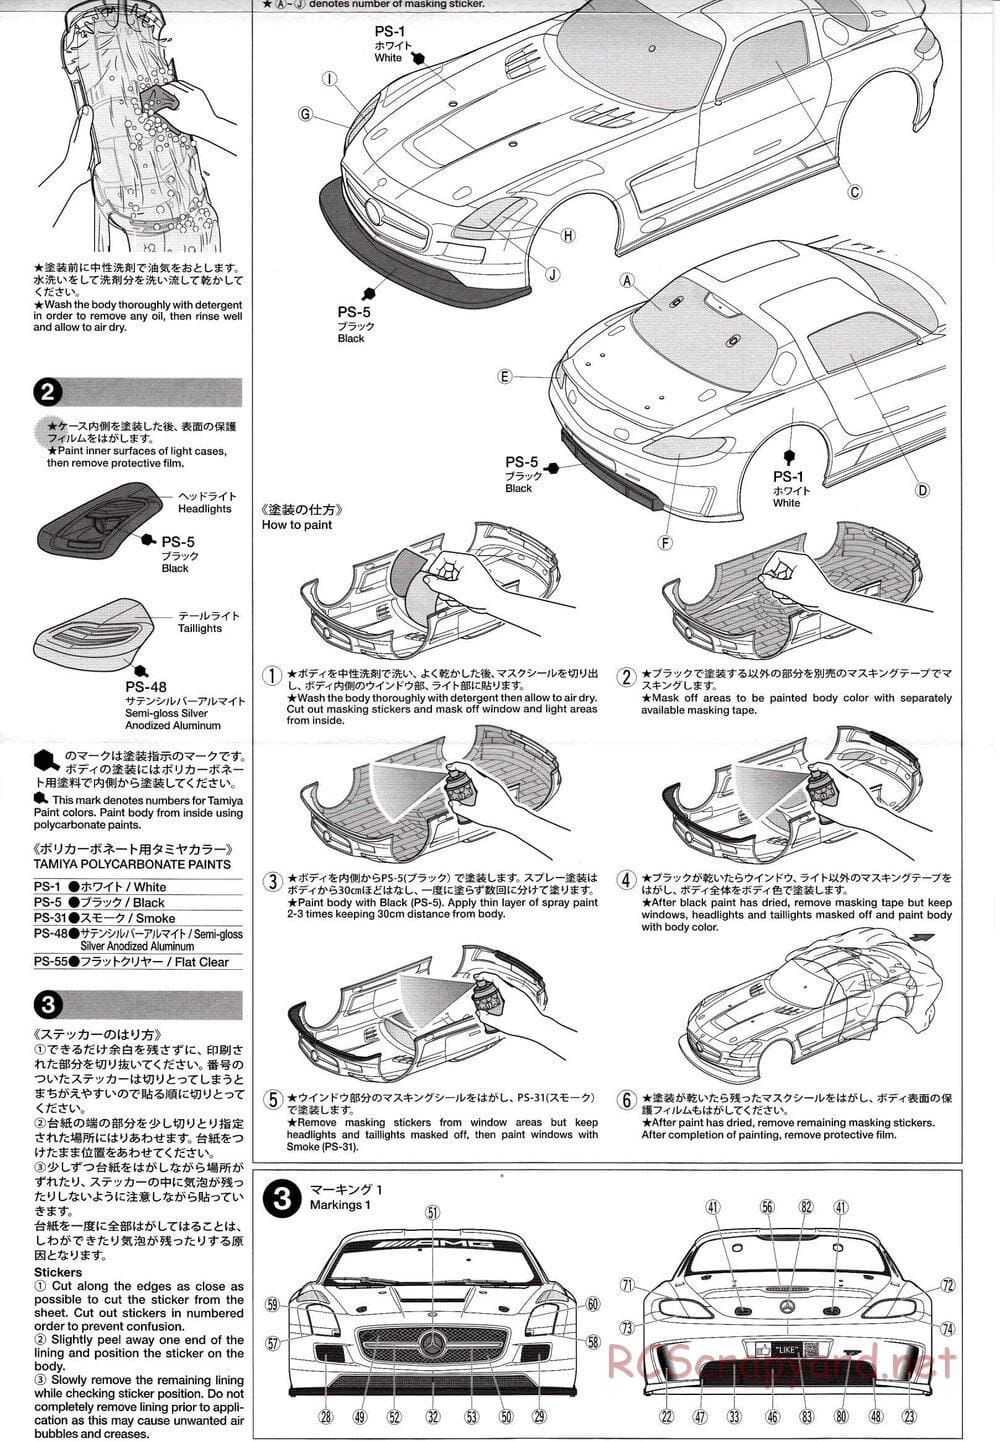 Tamiya - Mercedes Benz SLS AMG GT3 - TT-02 Chassis - Body Manual - Page 2